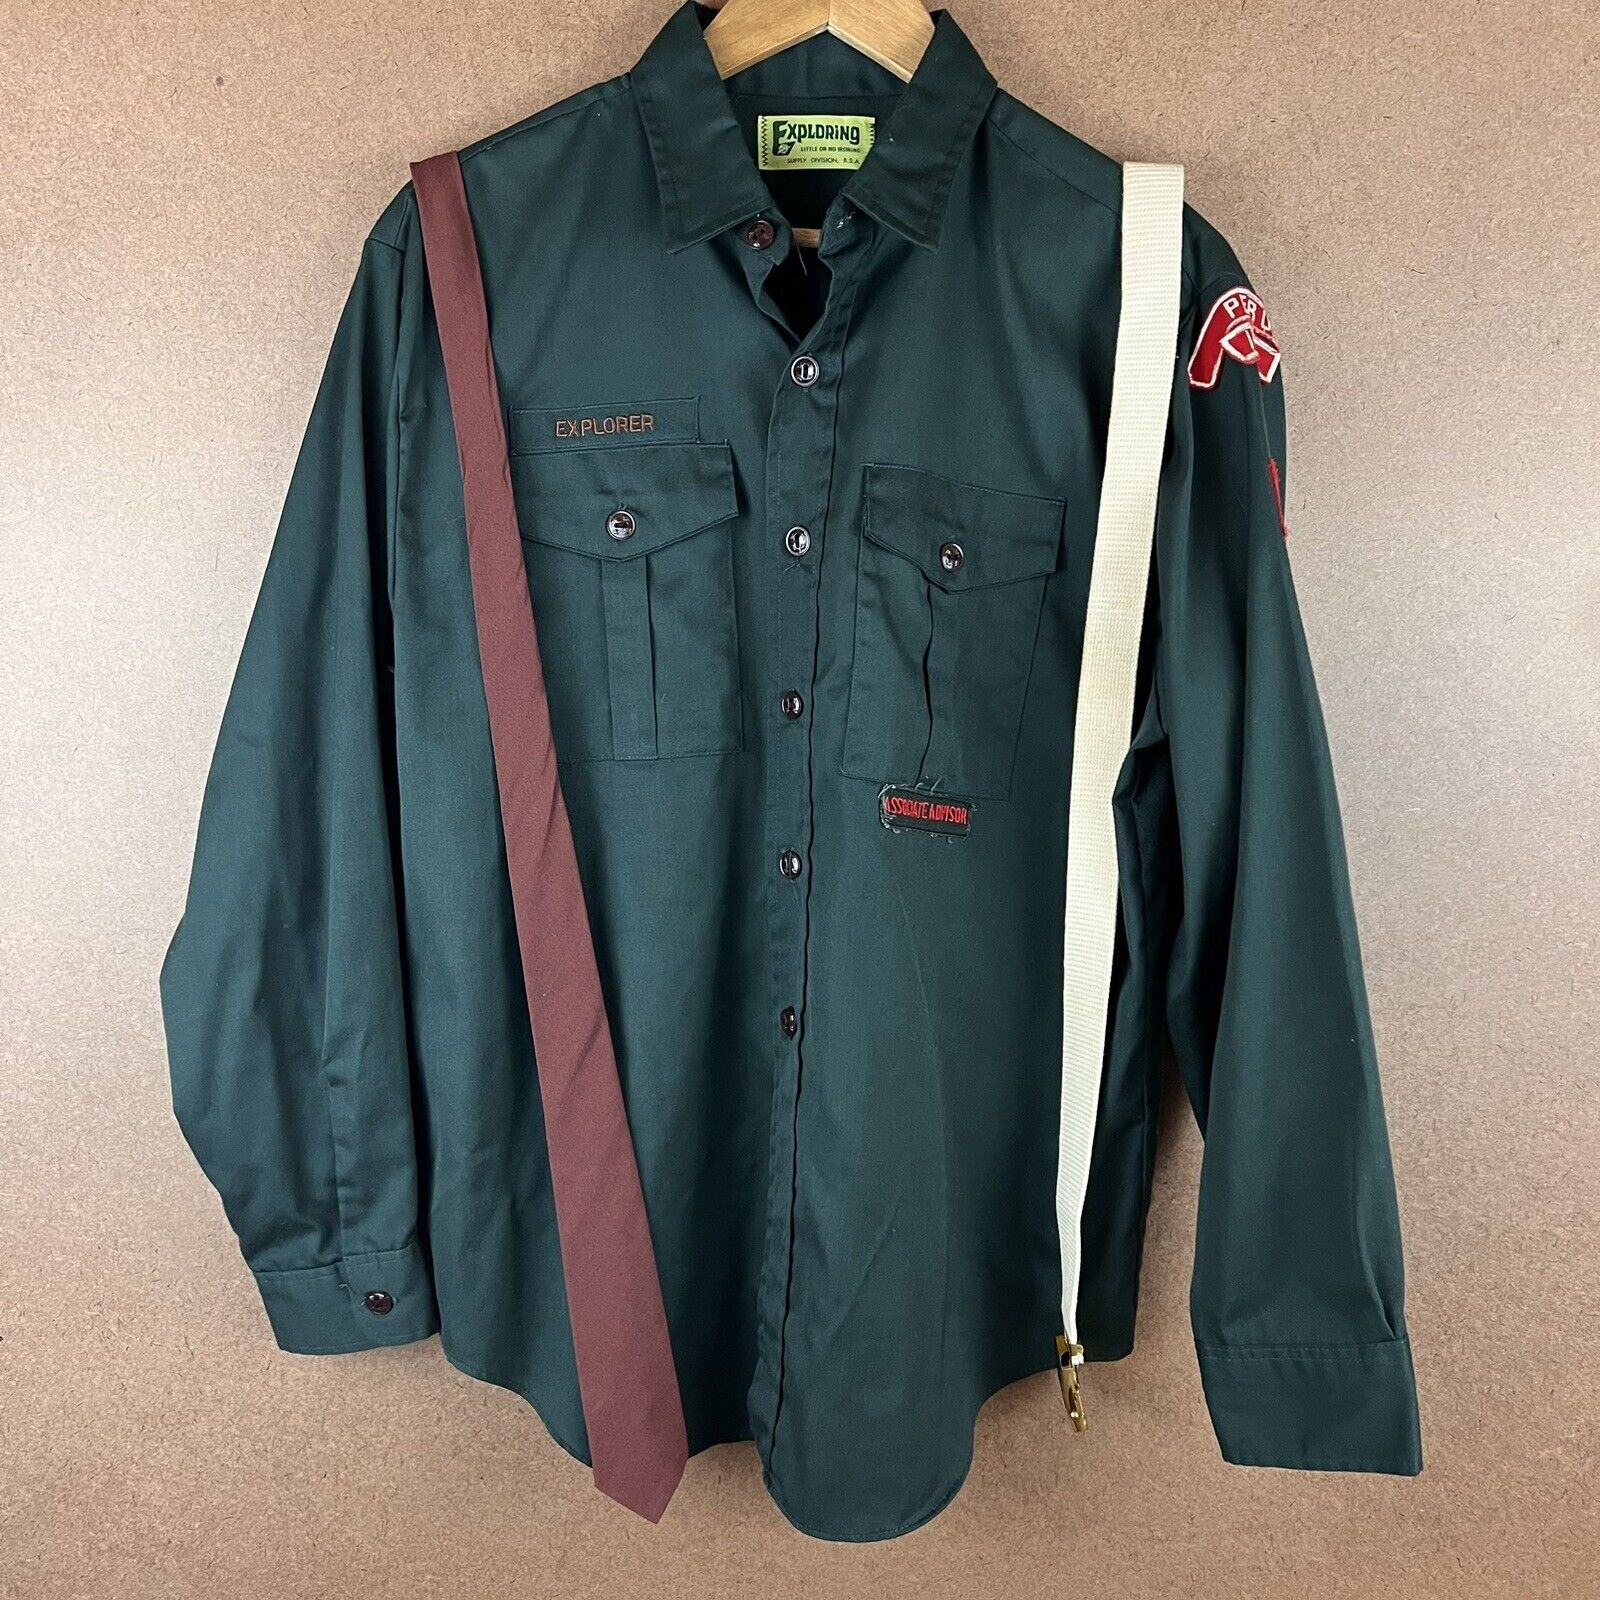 VTG BSA Boy Scouts Explorer Shirt w/ Tie and Belt Peru ILL Large USA